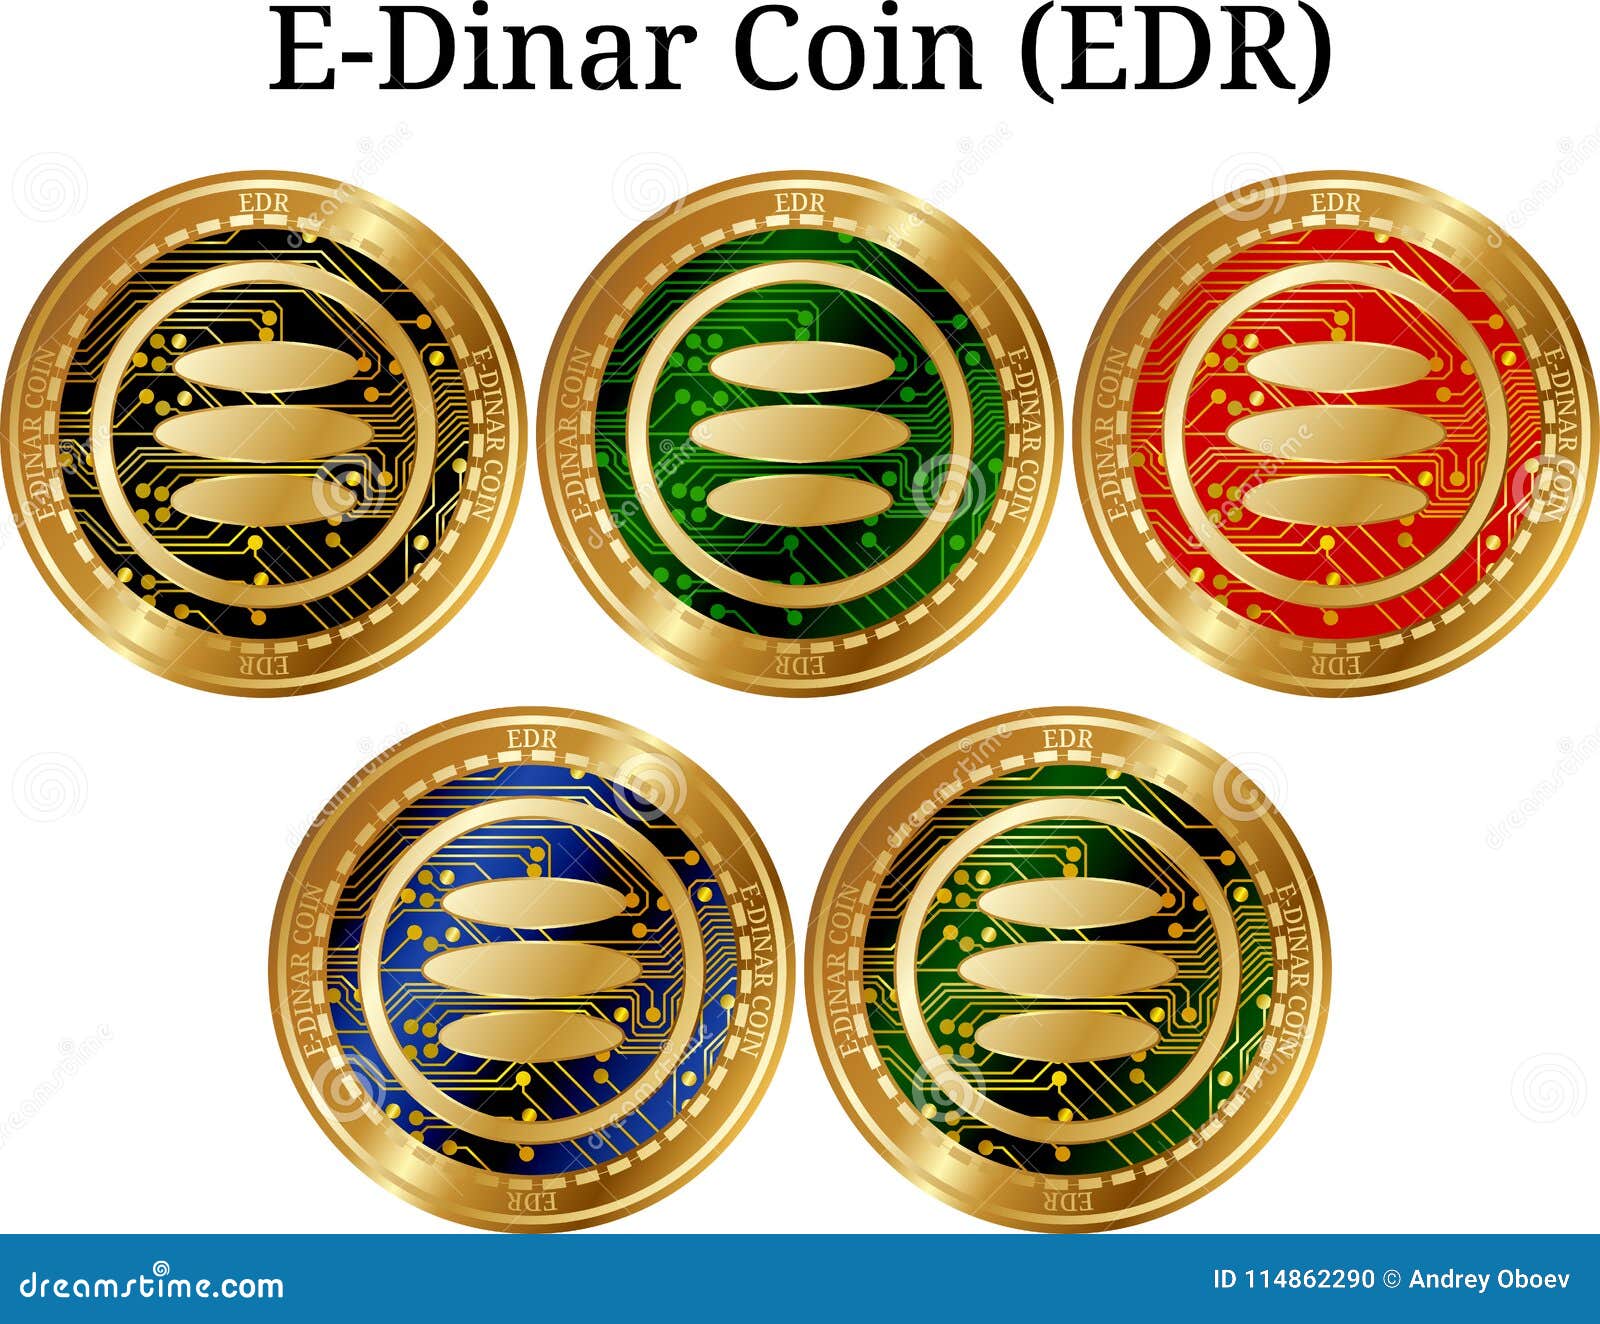 edr coin